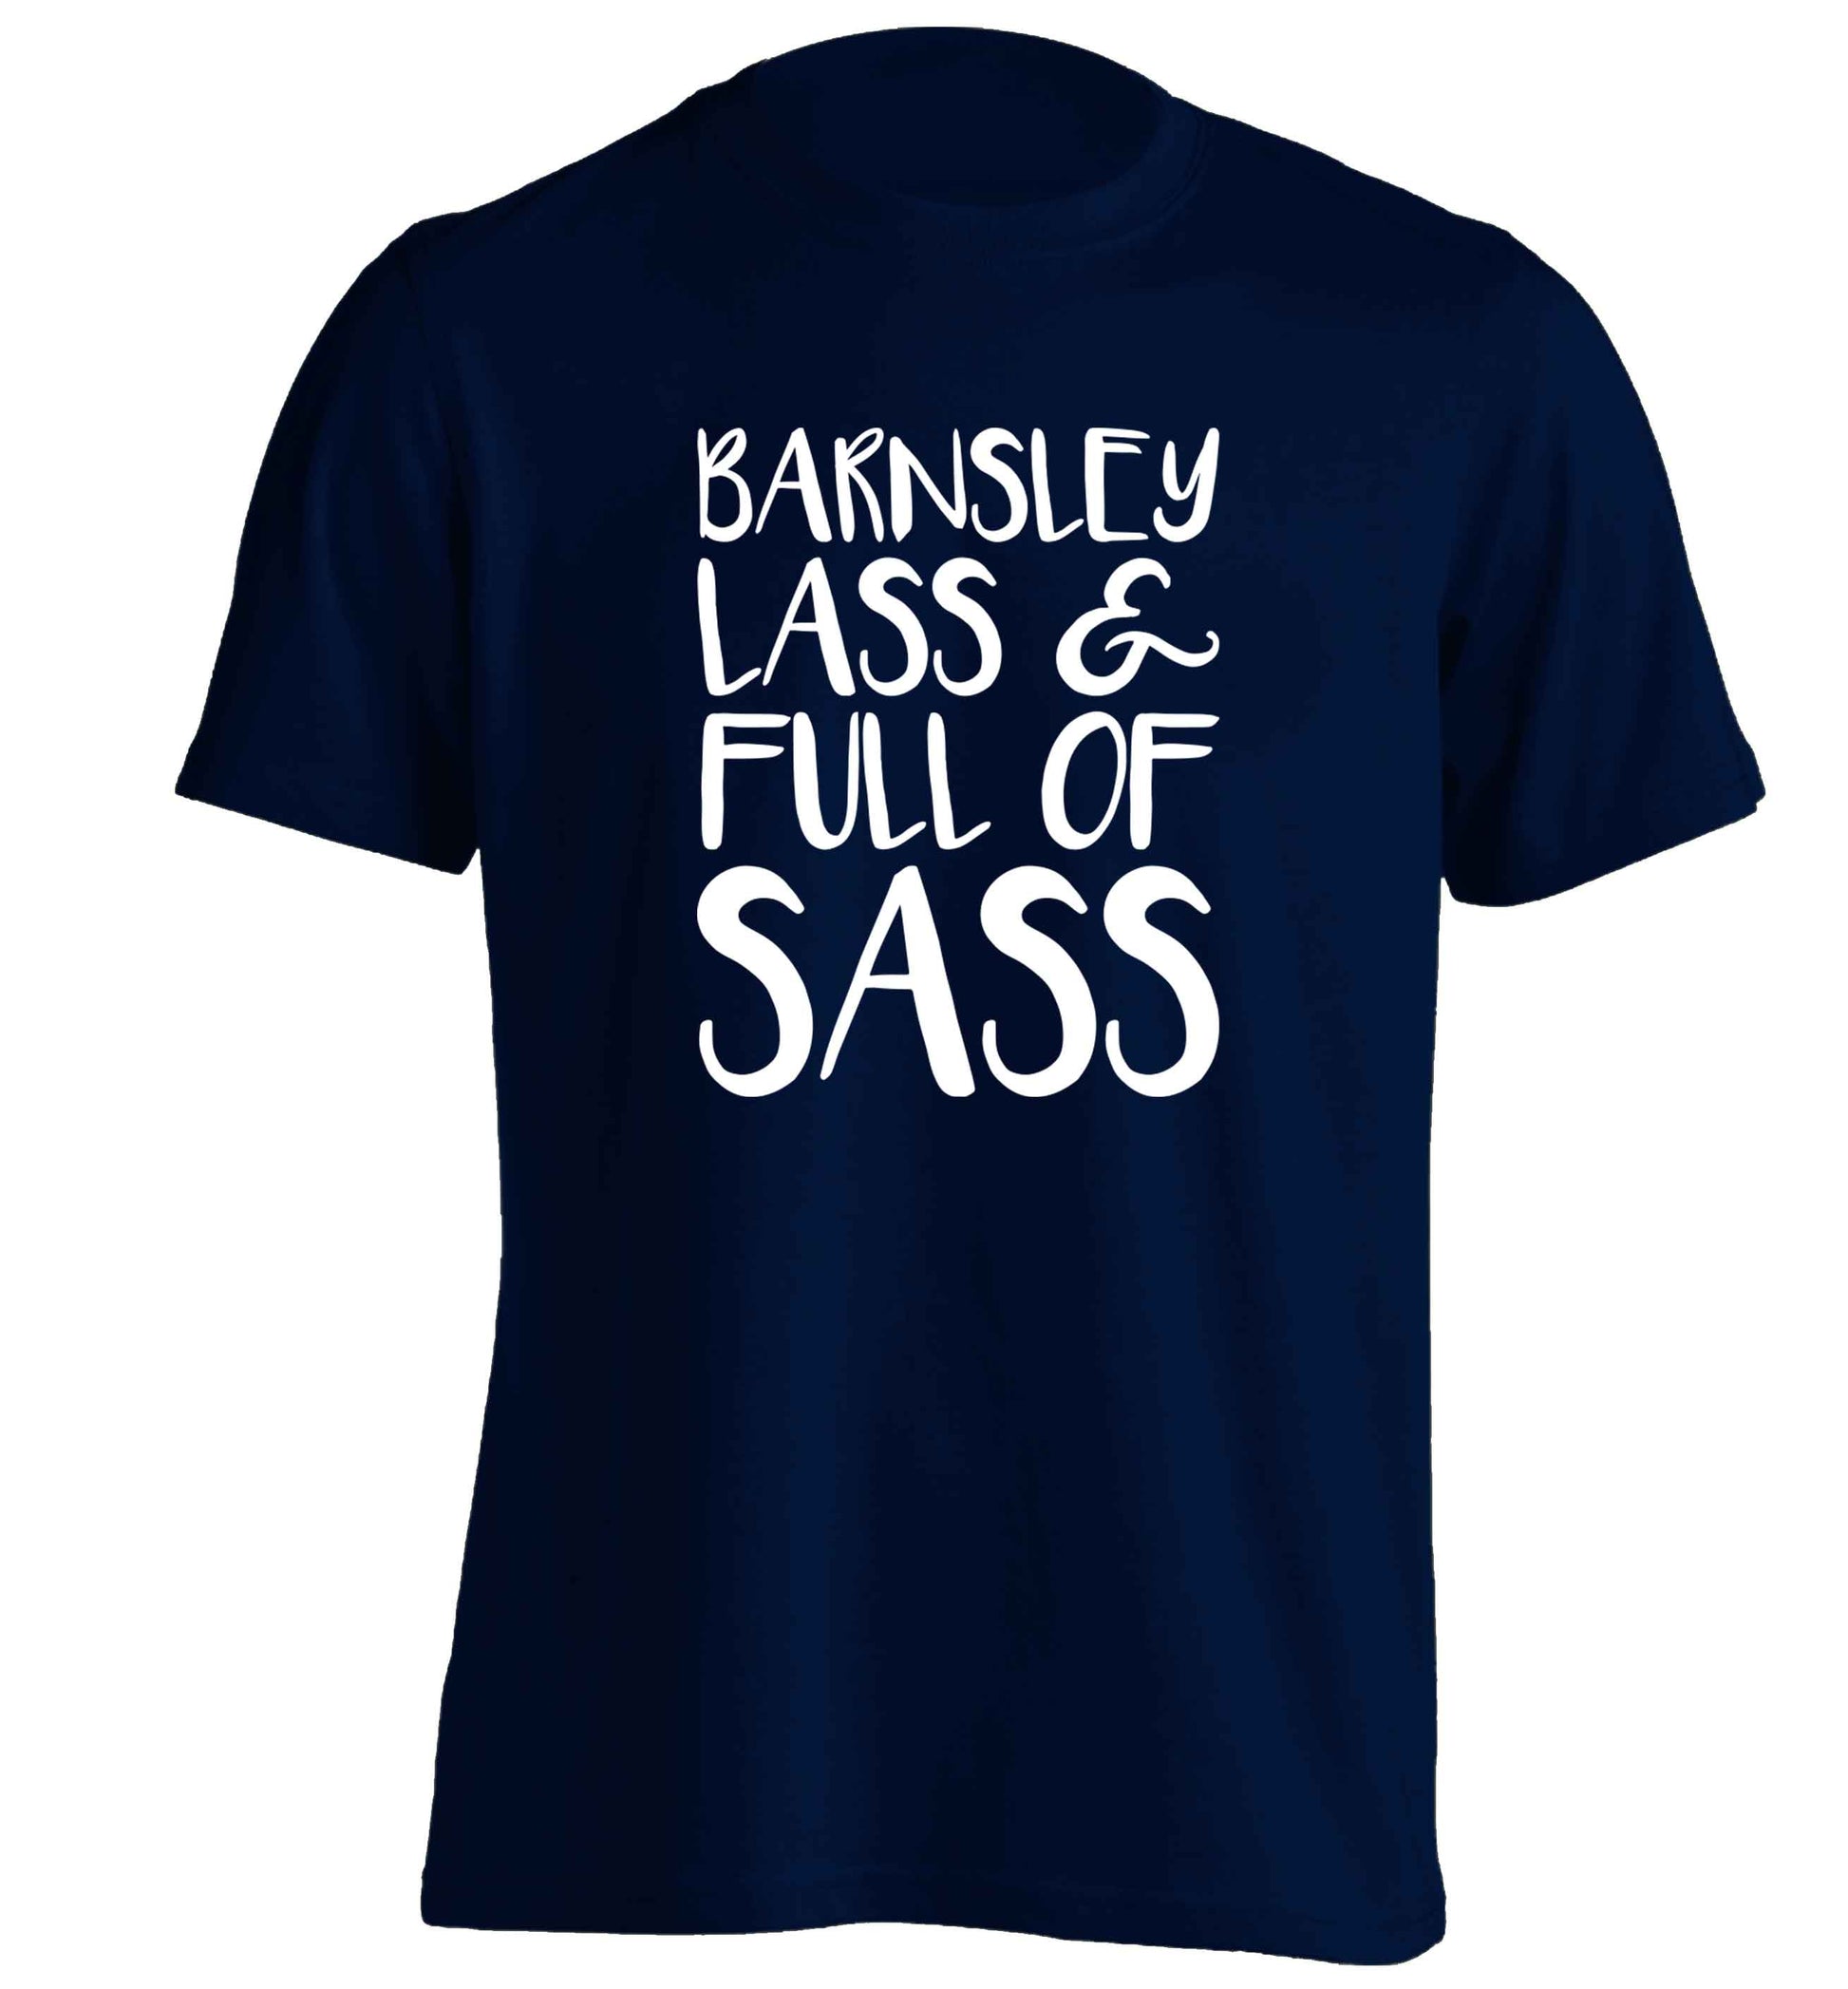 Barnsley lass and full of sass adults unisex navy Tshirt 2XL